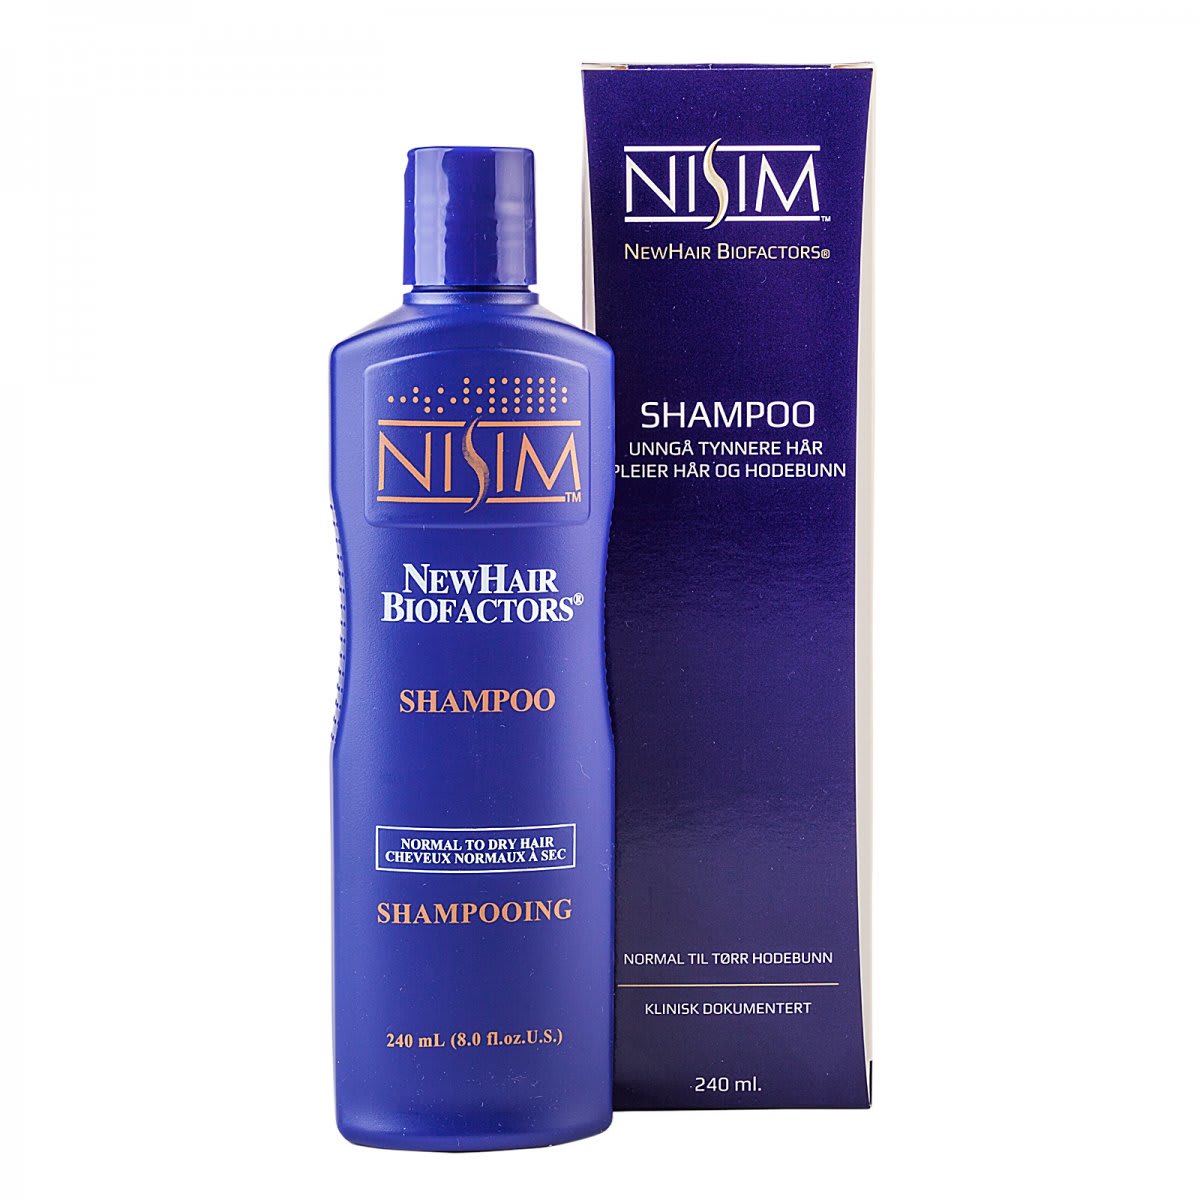 Nisim NewHair Shampoo Dry